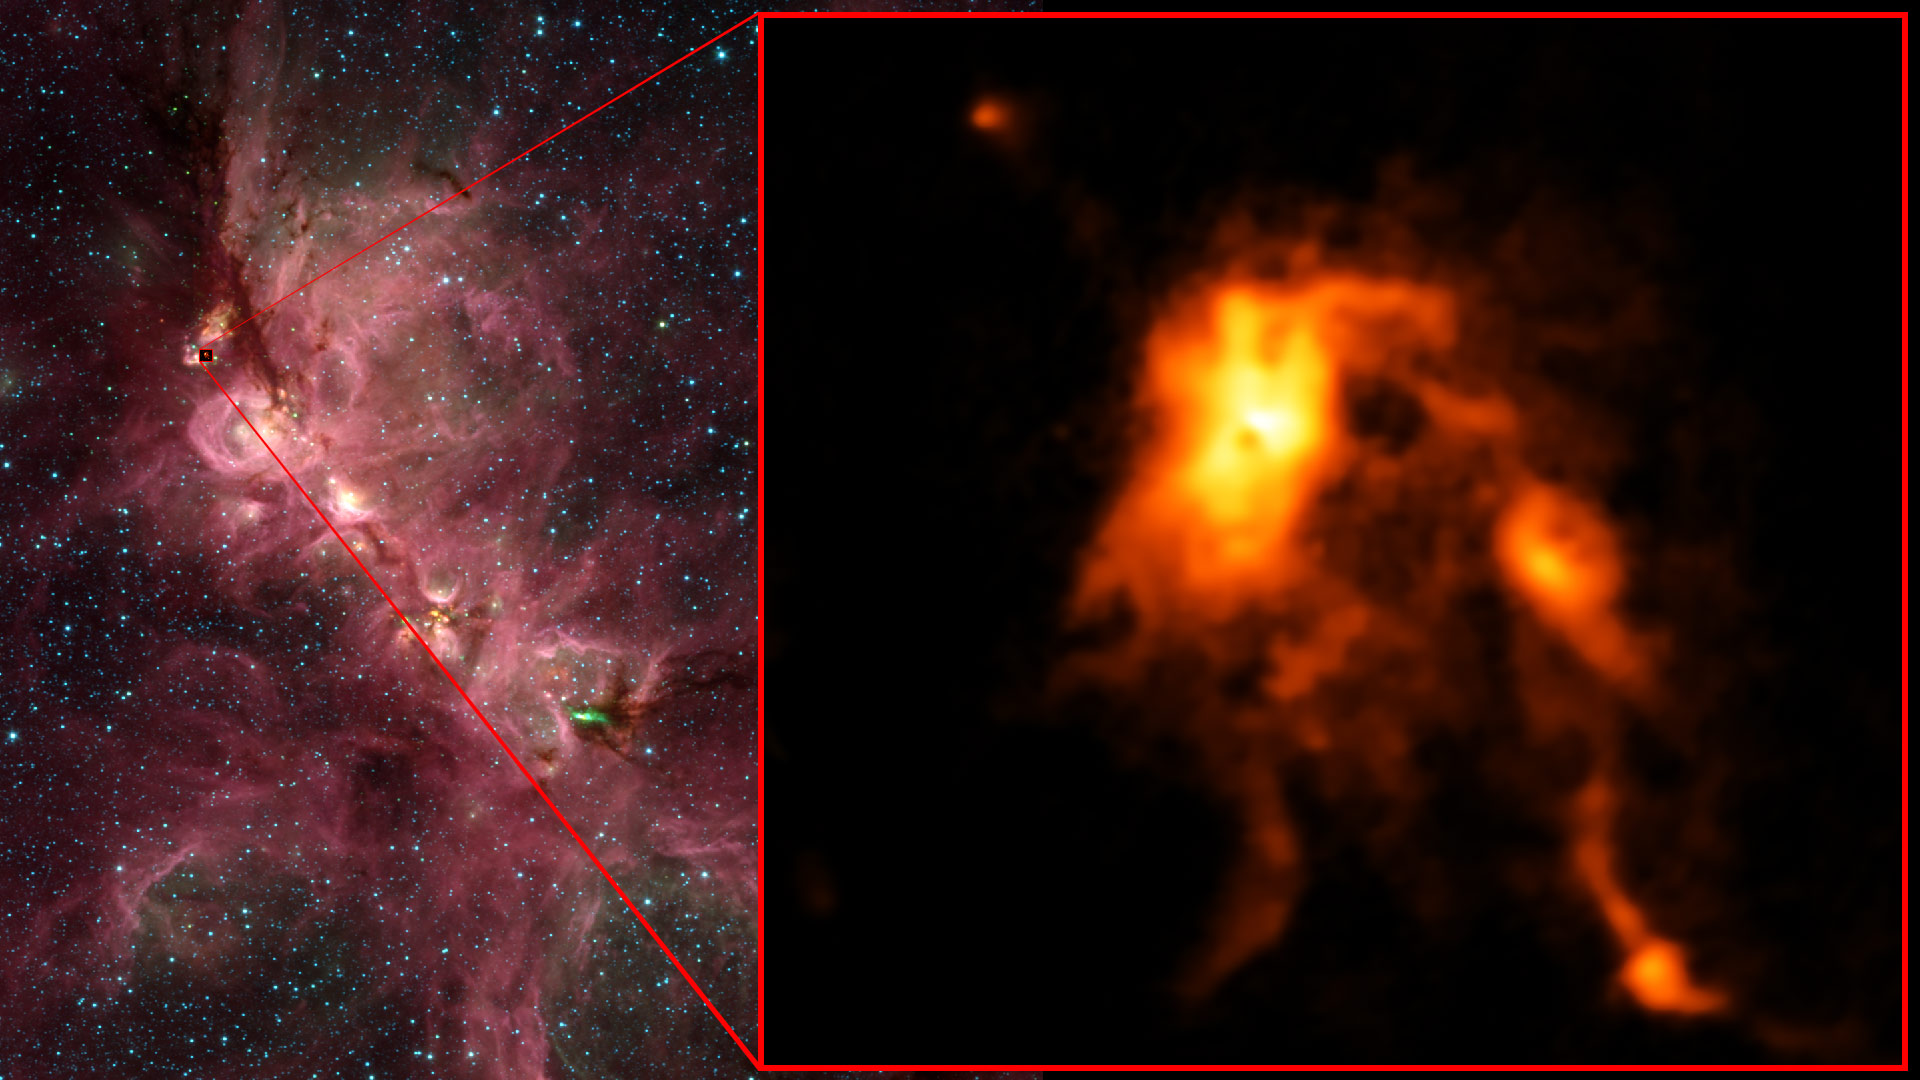 protostar formation